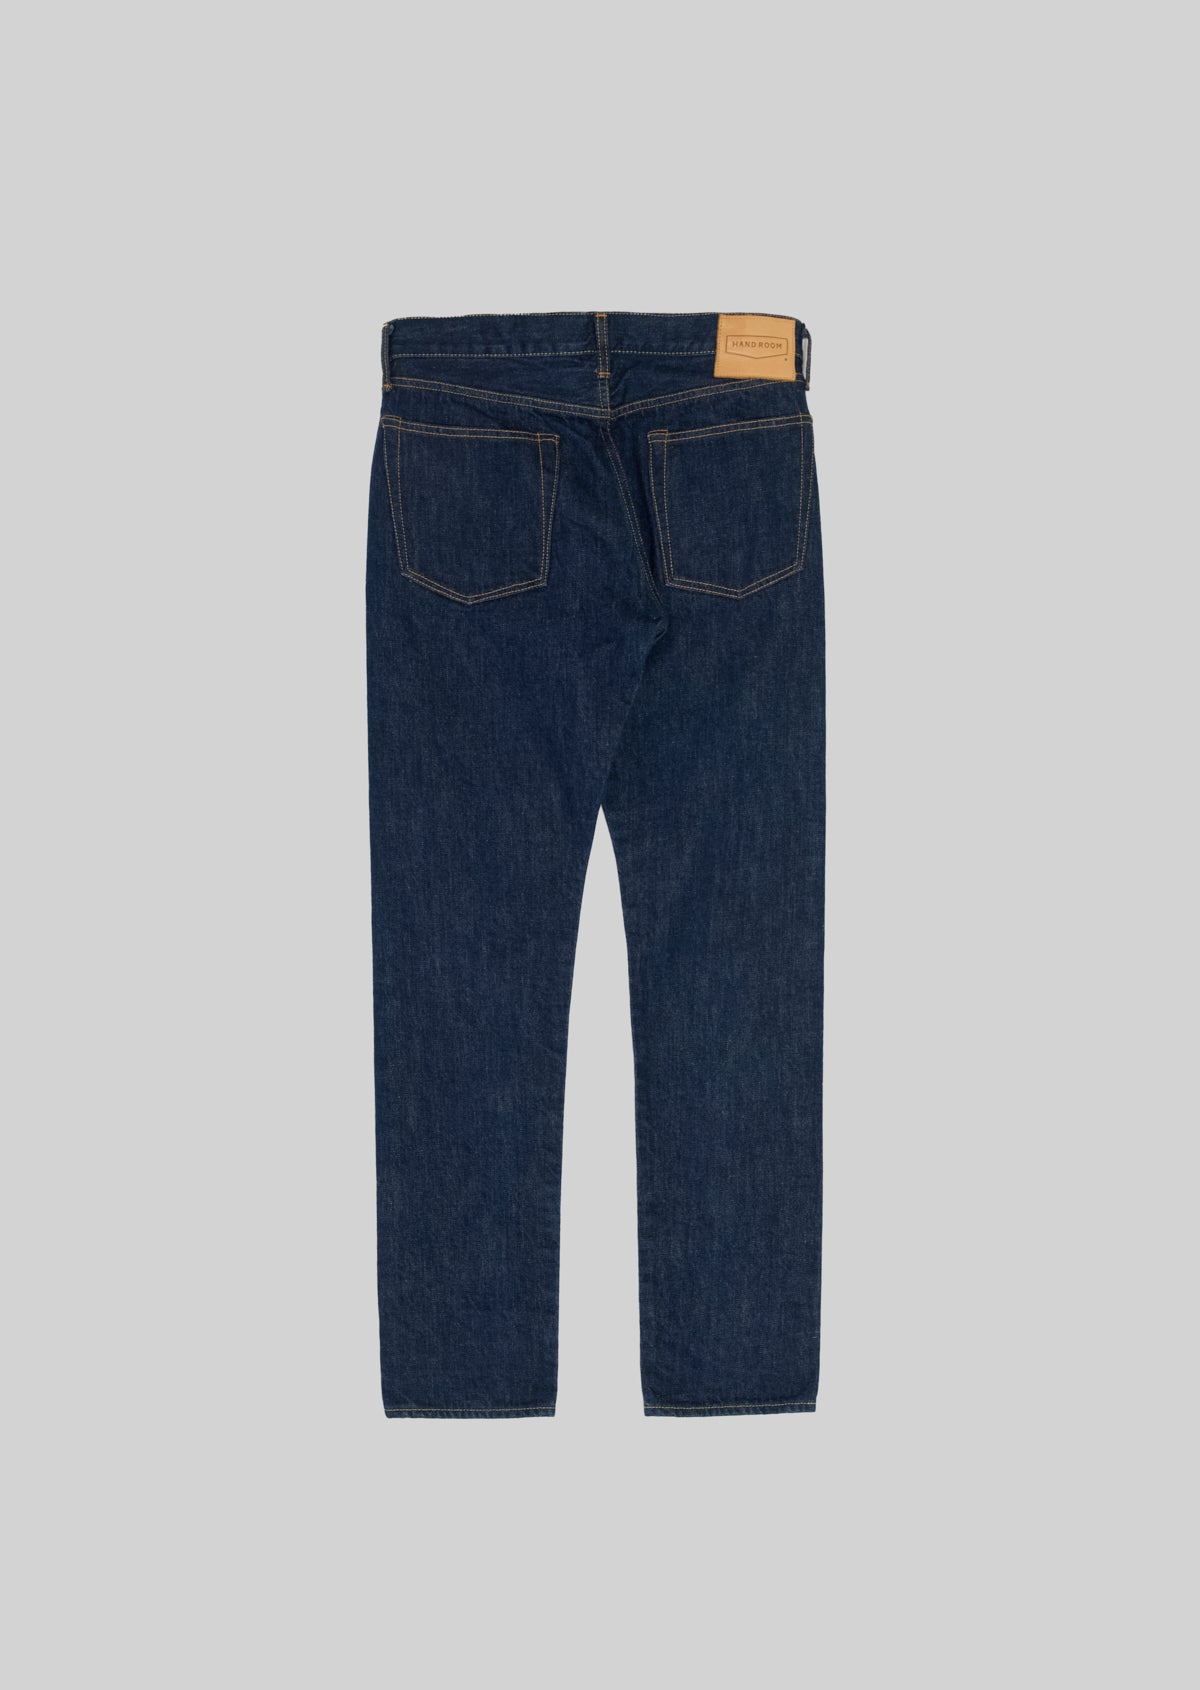 BOSS - Slim-fit jeans in blue cashmere-touch Italian denim